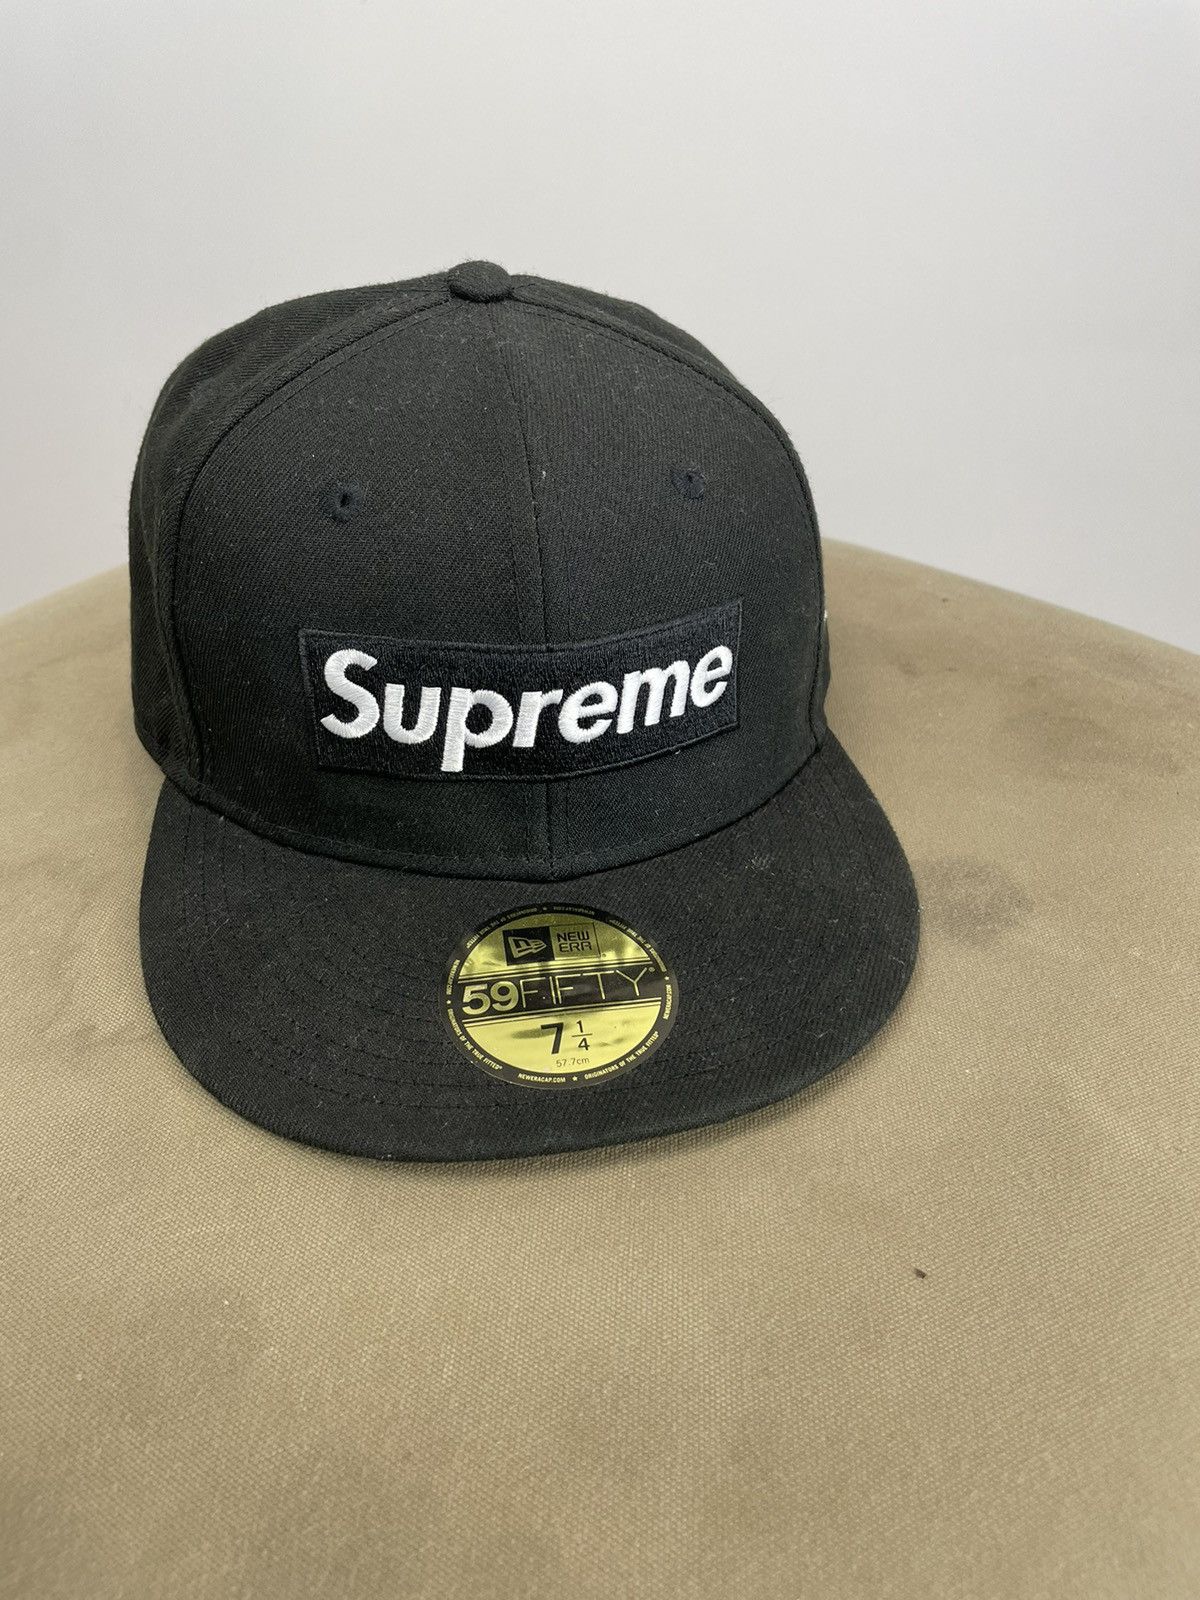 Supreme Supreme Sharpie Box Logo New Era Fitted Cap 7 1/4 | Grailed